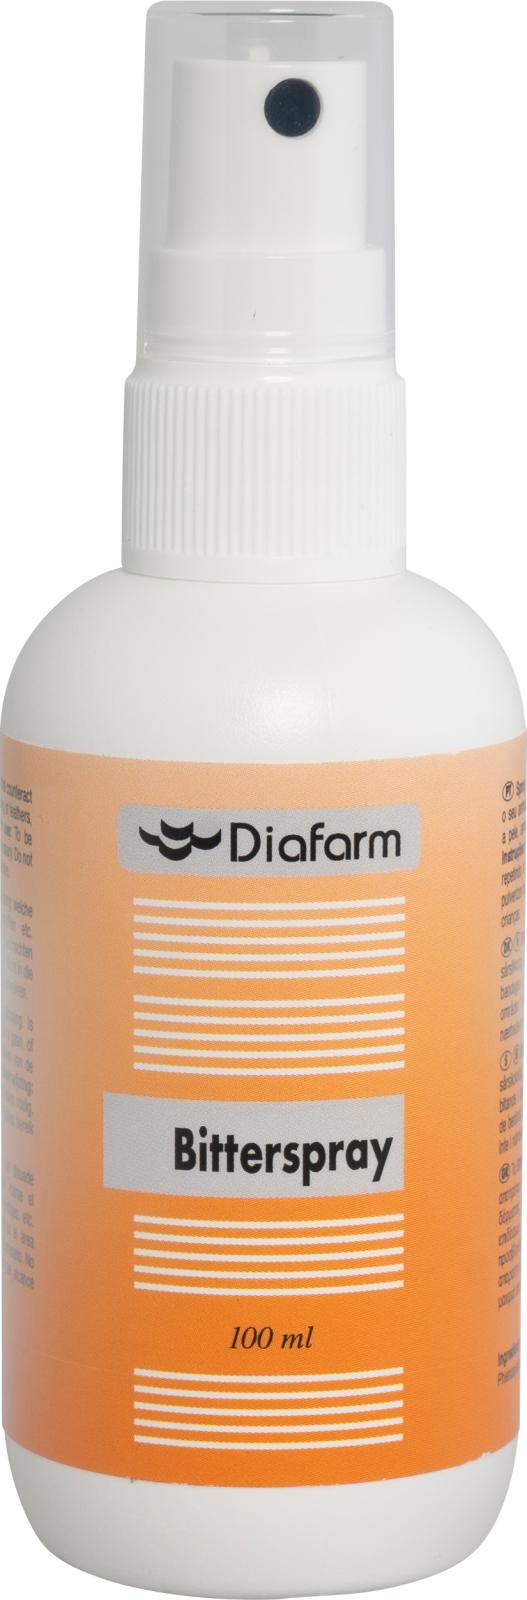 Diafarm bitterspray 100 ml